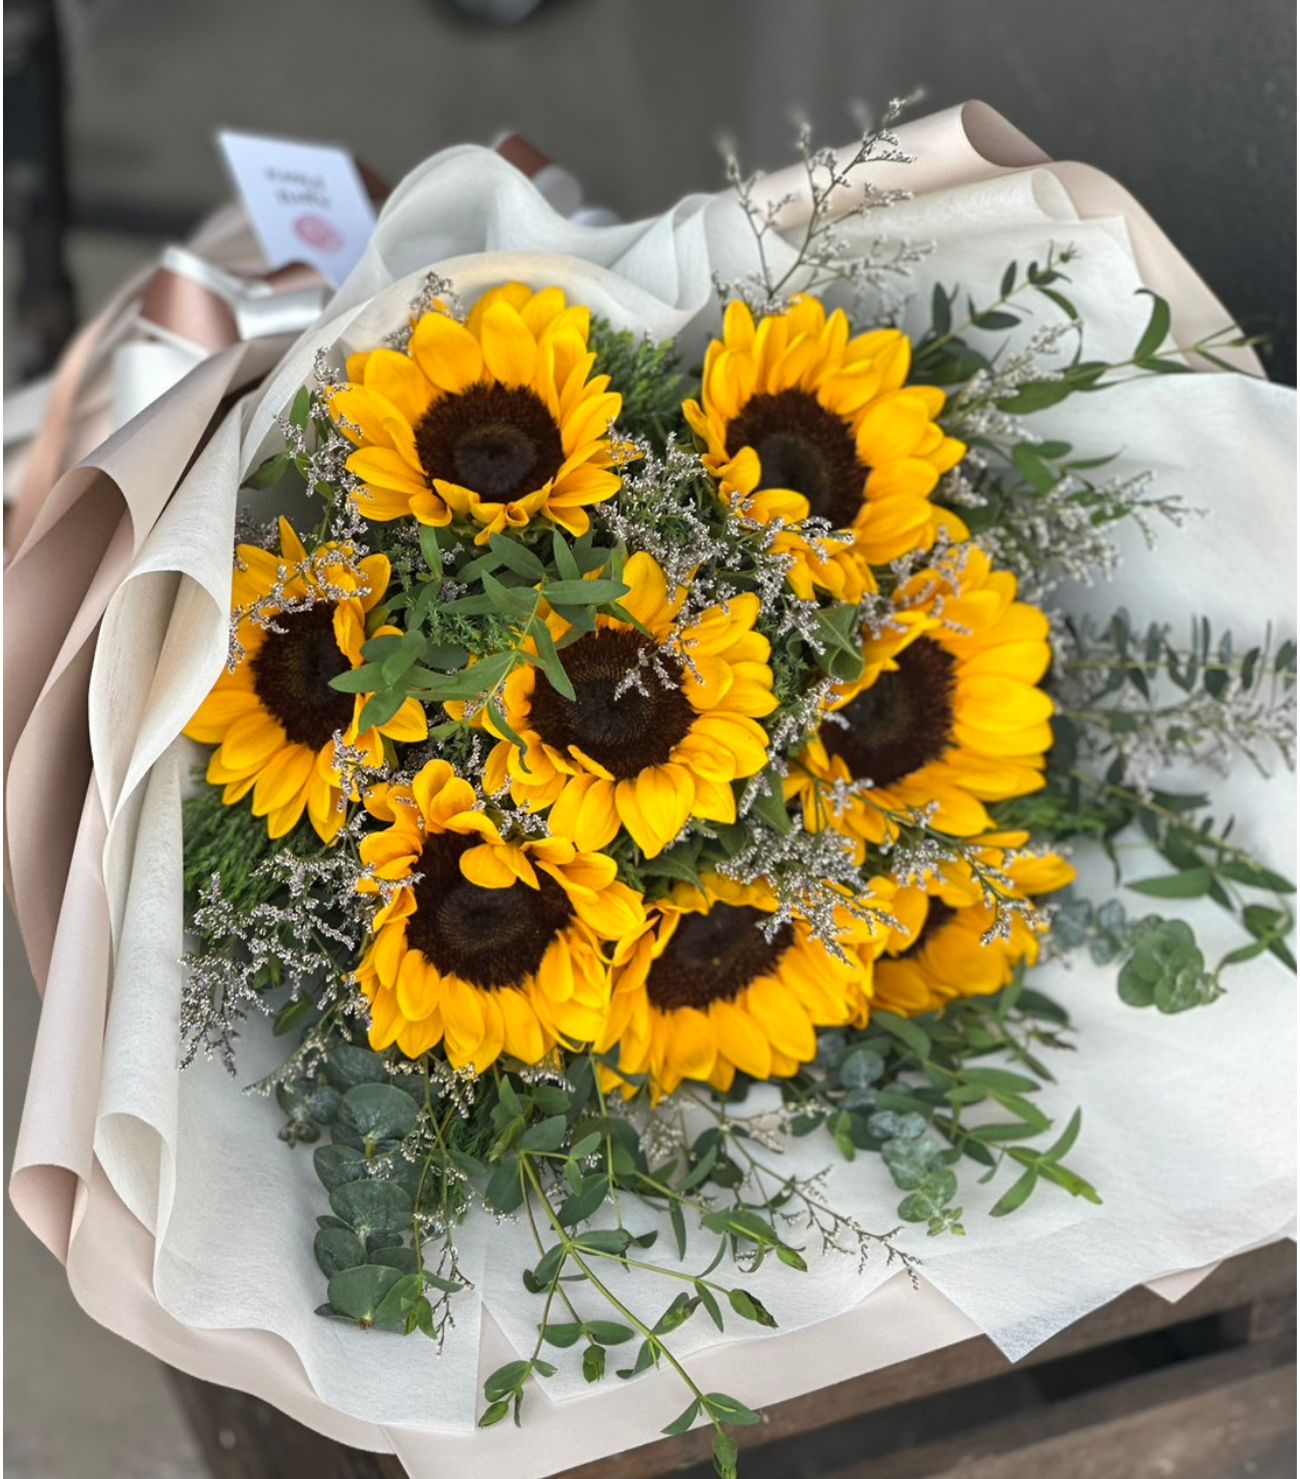 "Sun Shining" Bouquet Of Sunflowers